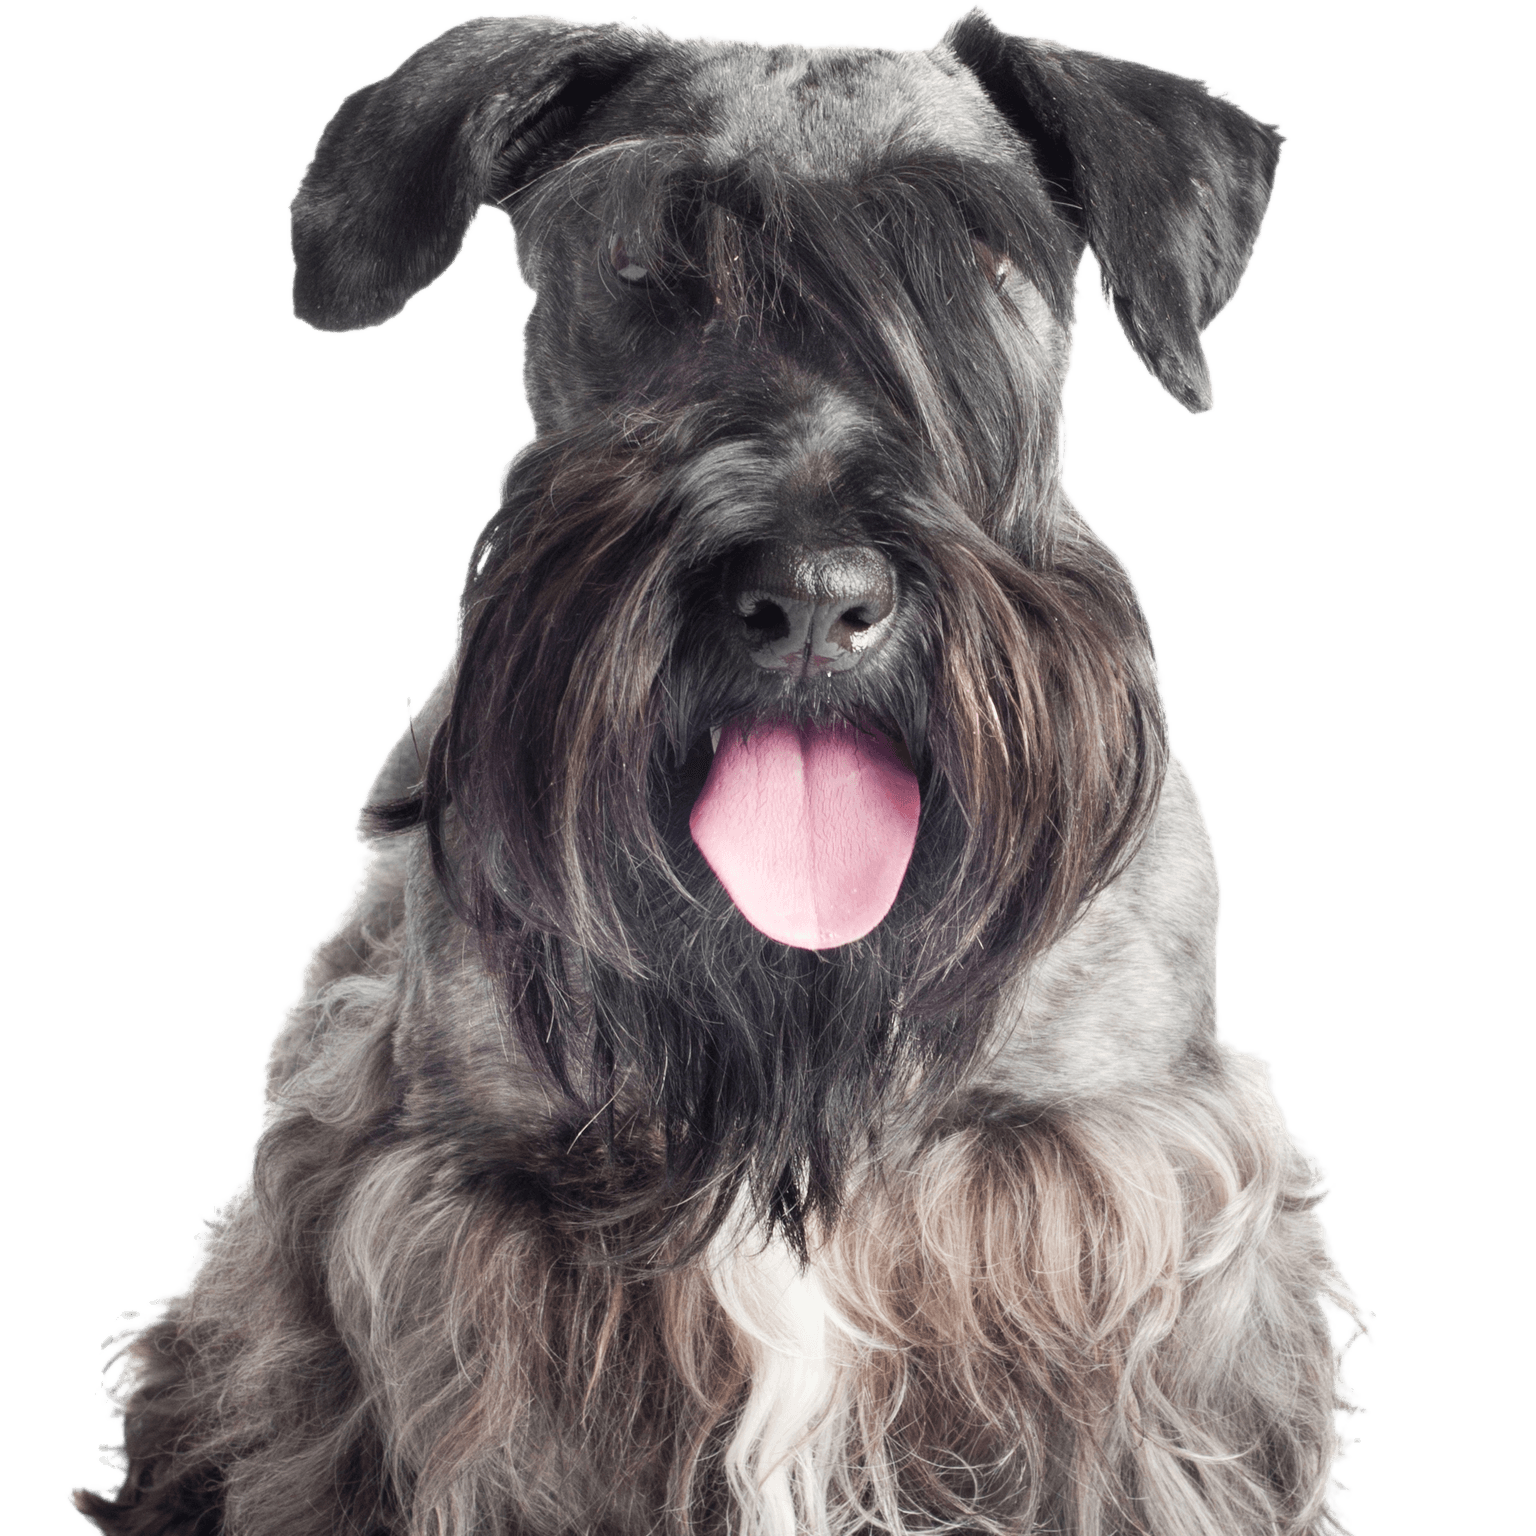 Czech terrier dog isolated